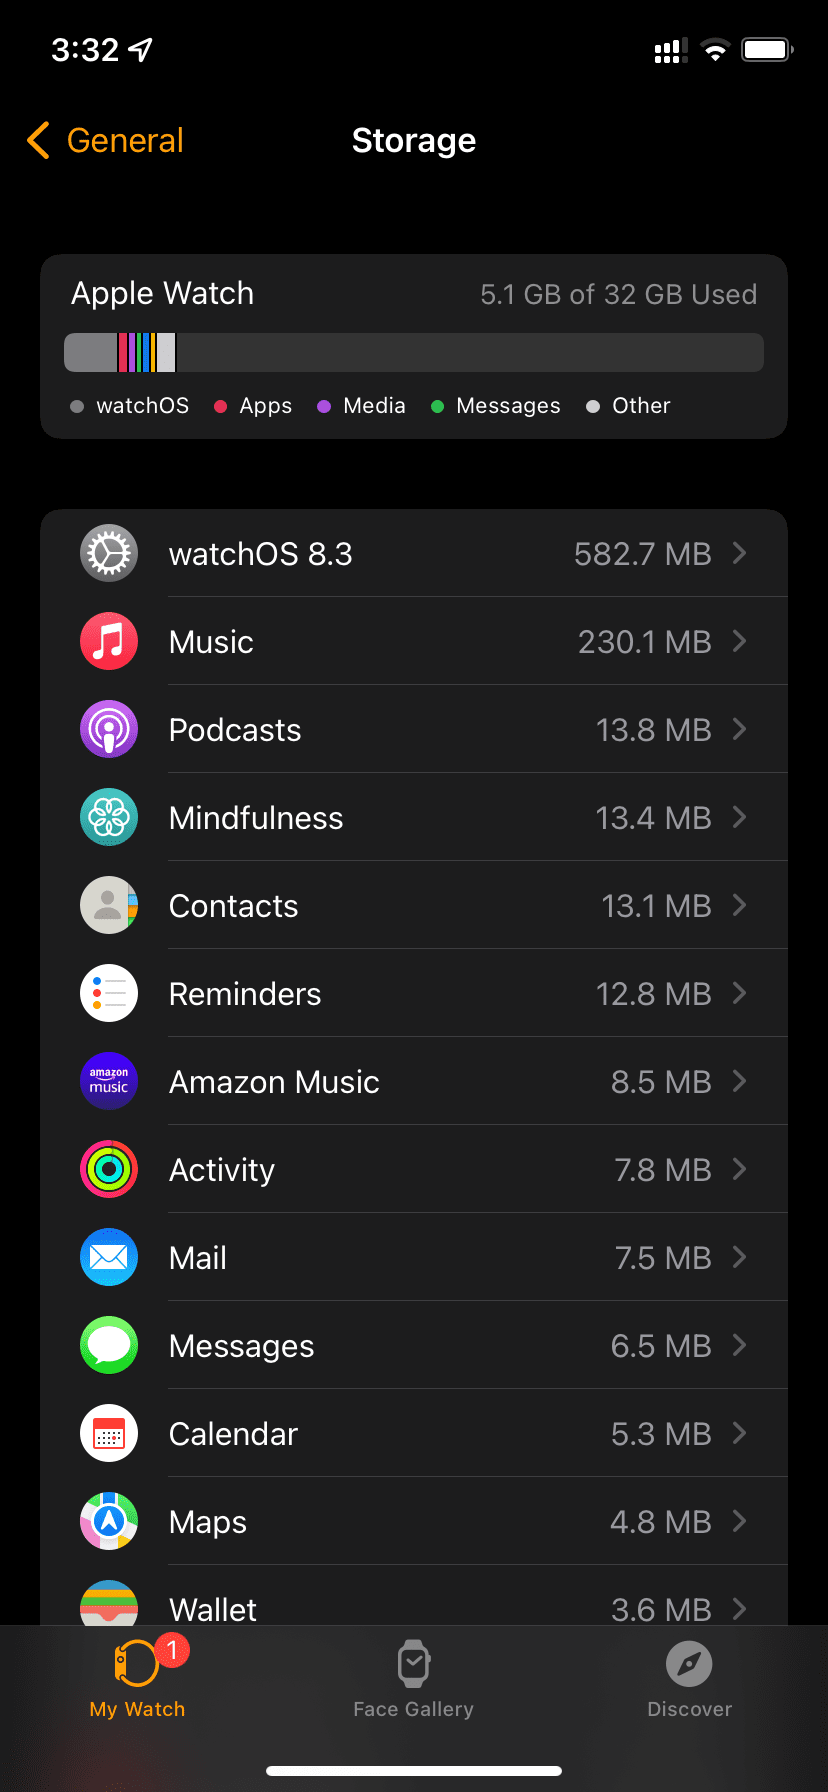 Storage settings on Apple Watch